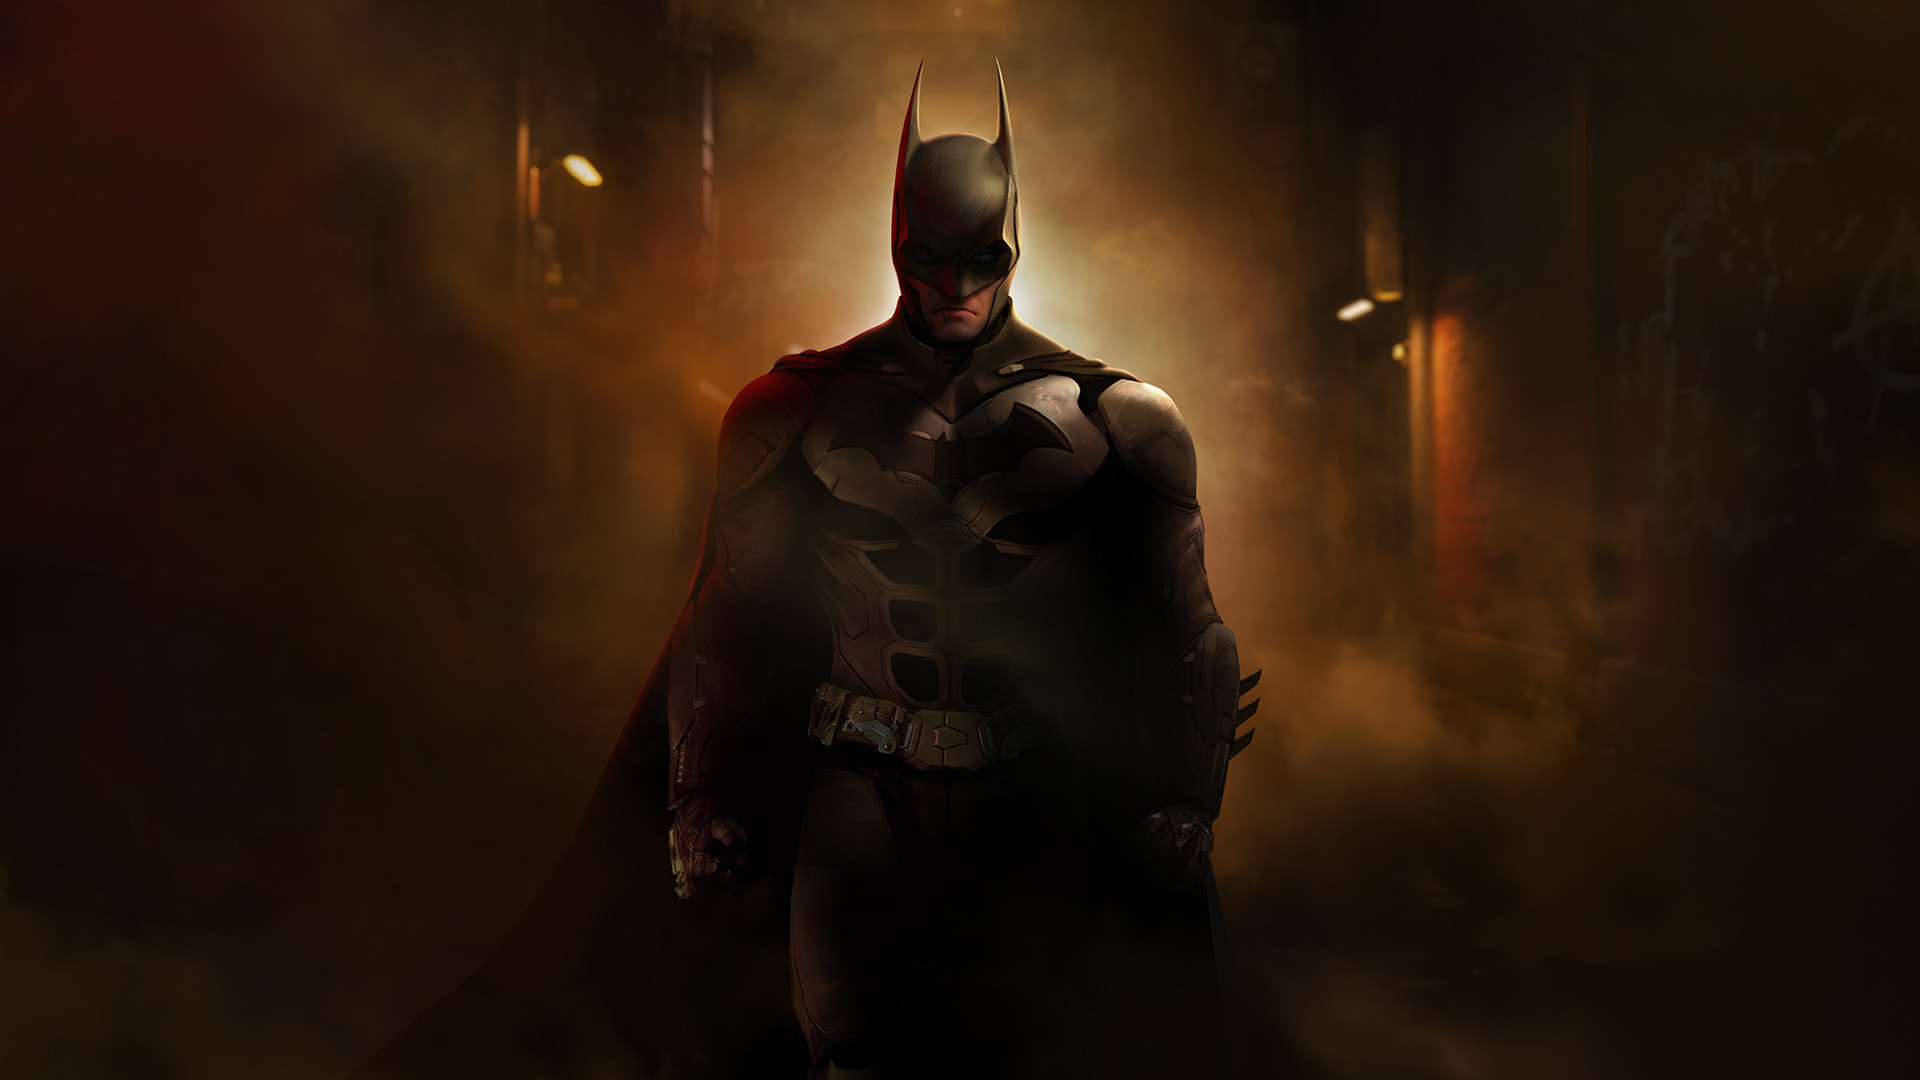 Batman standing in the dark alone in Arkham Shadow